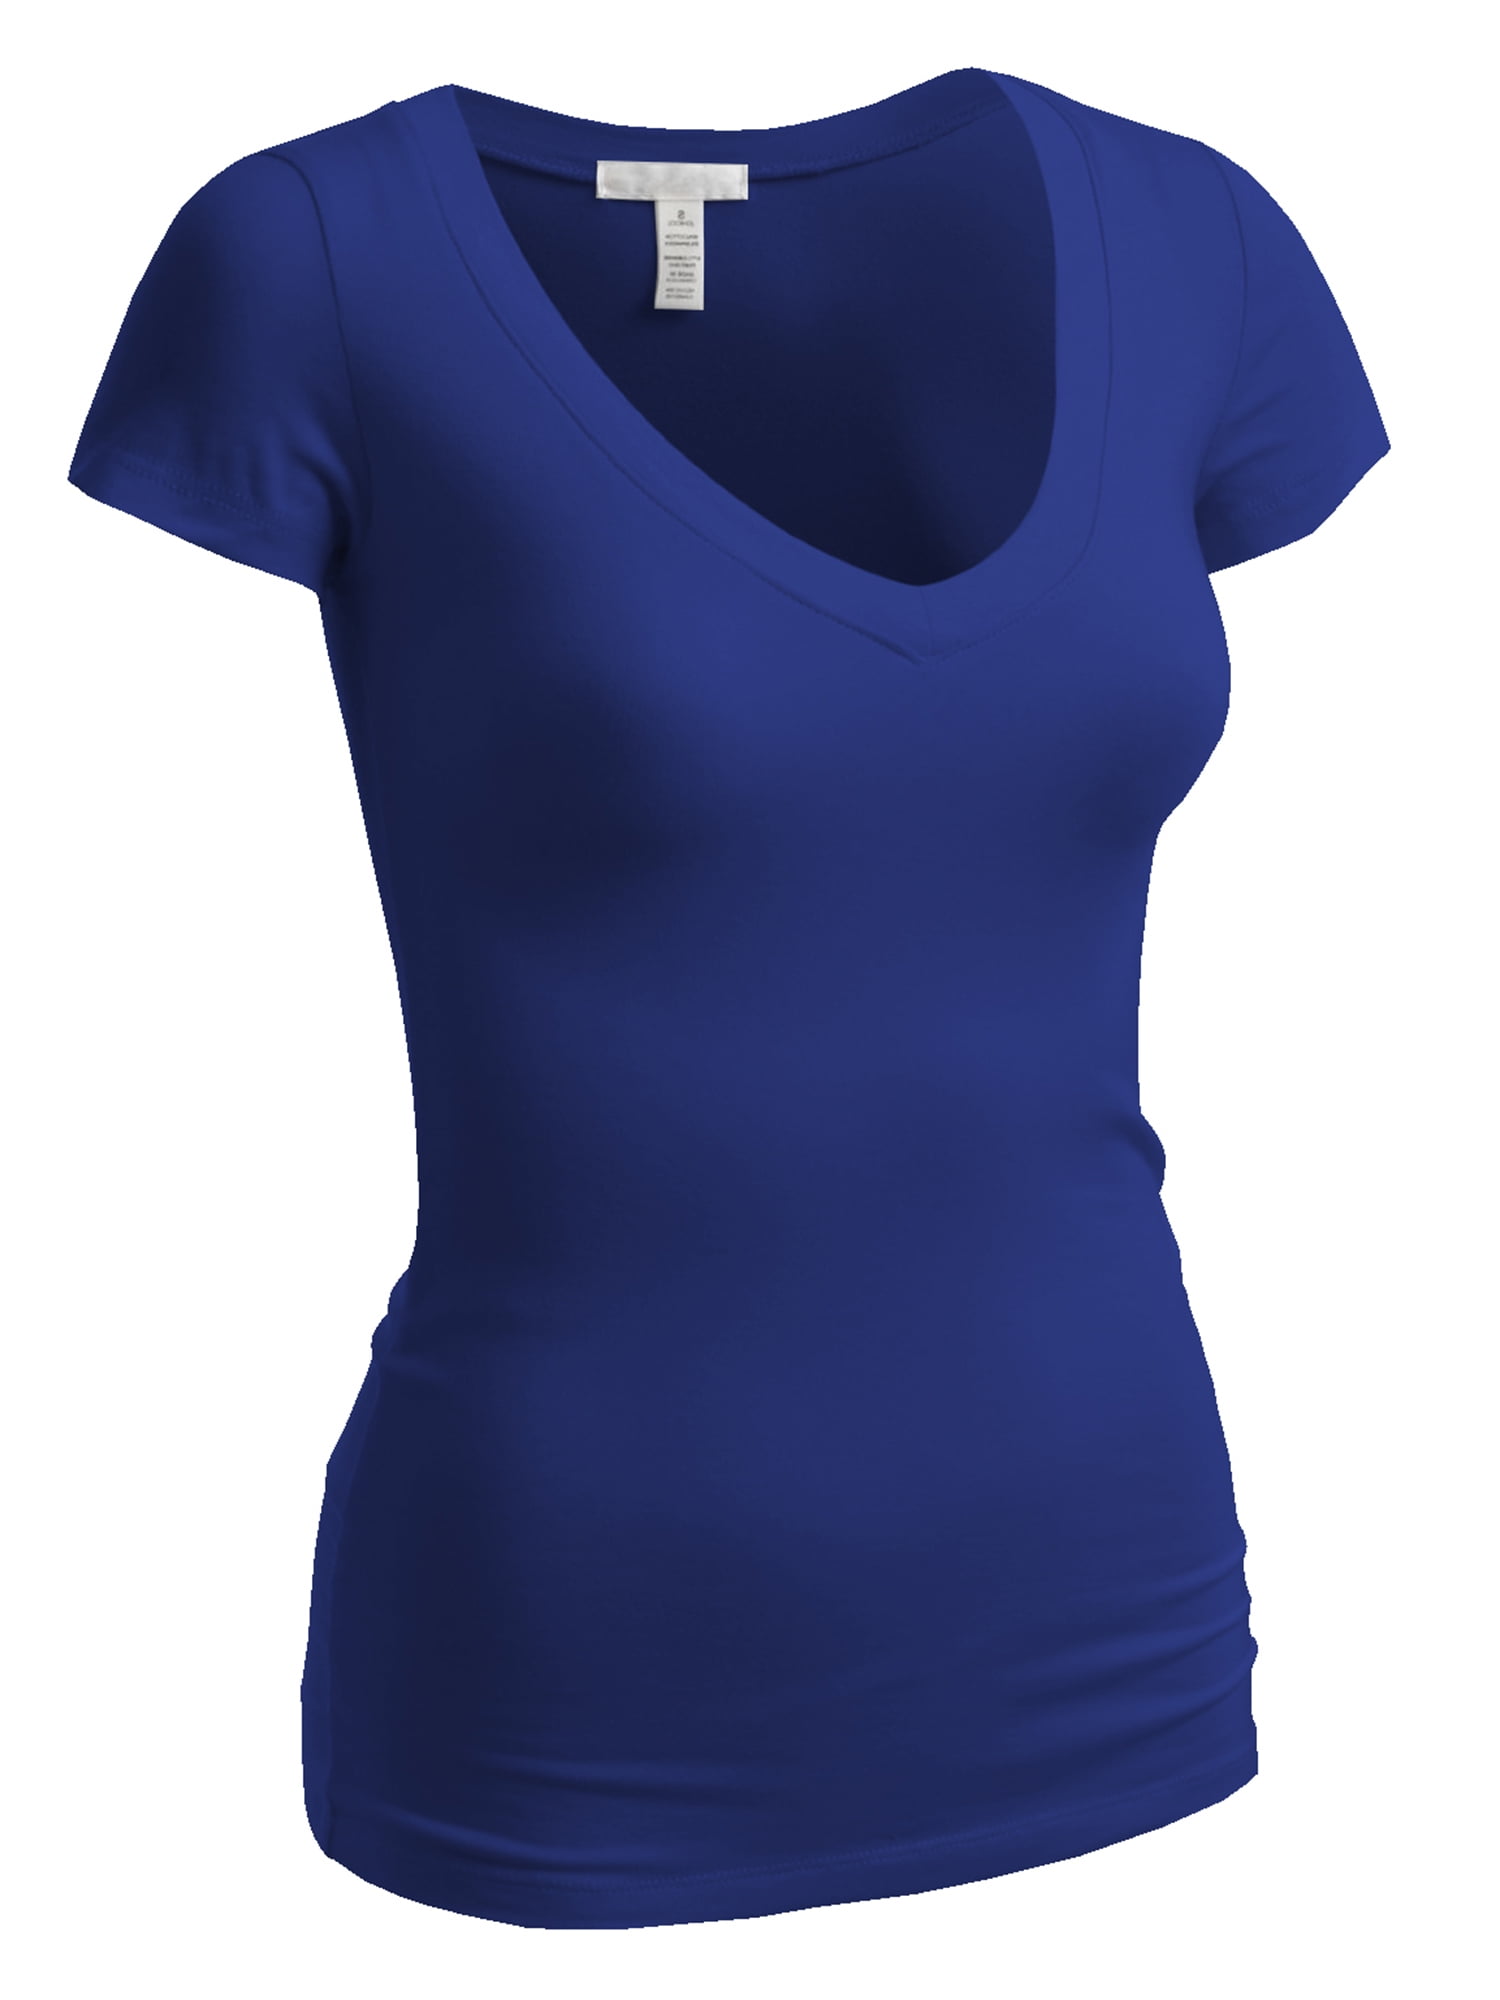 Emmalise Women's Short Sleeve T Shirt V Neck Tee (Burgundy, Large) 